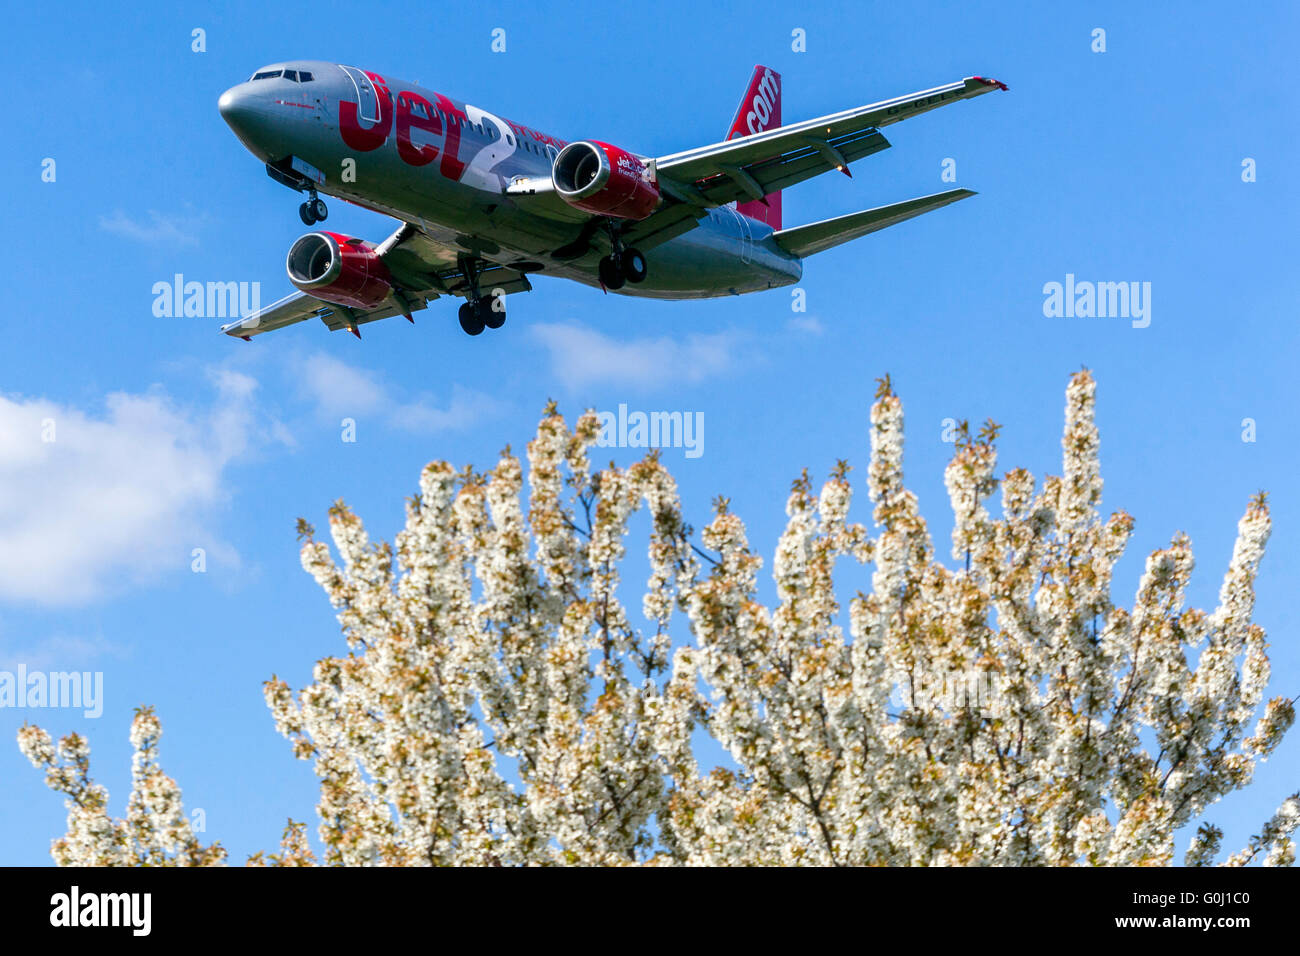 Jet2 Boeing 737 approaching for landing above tree blossoms, Prague, Czech Republic Stock Photo